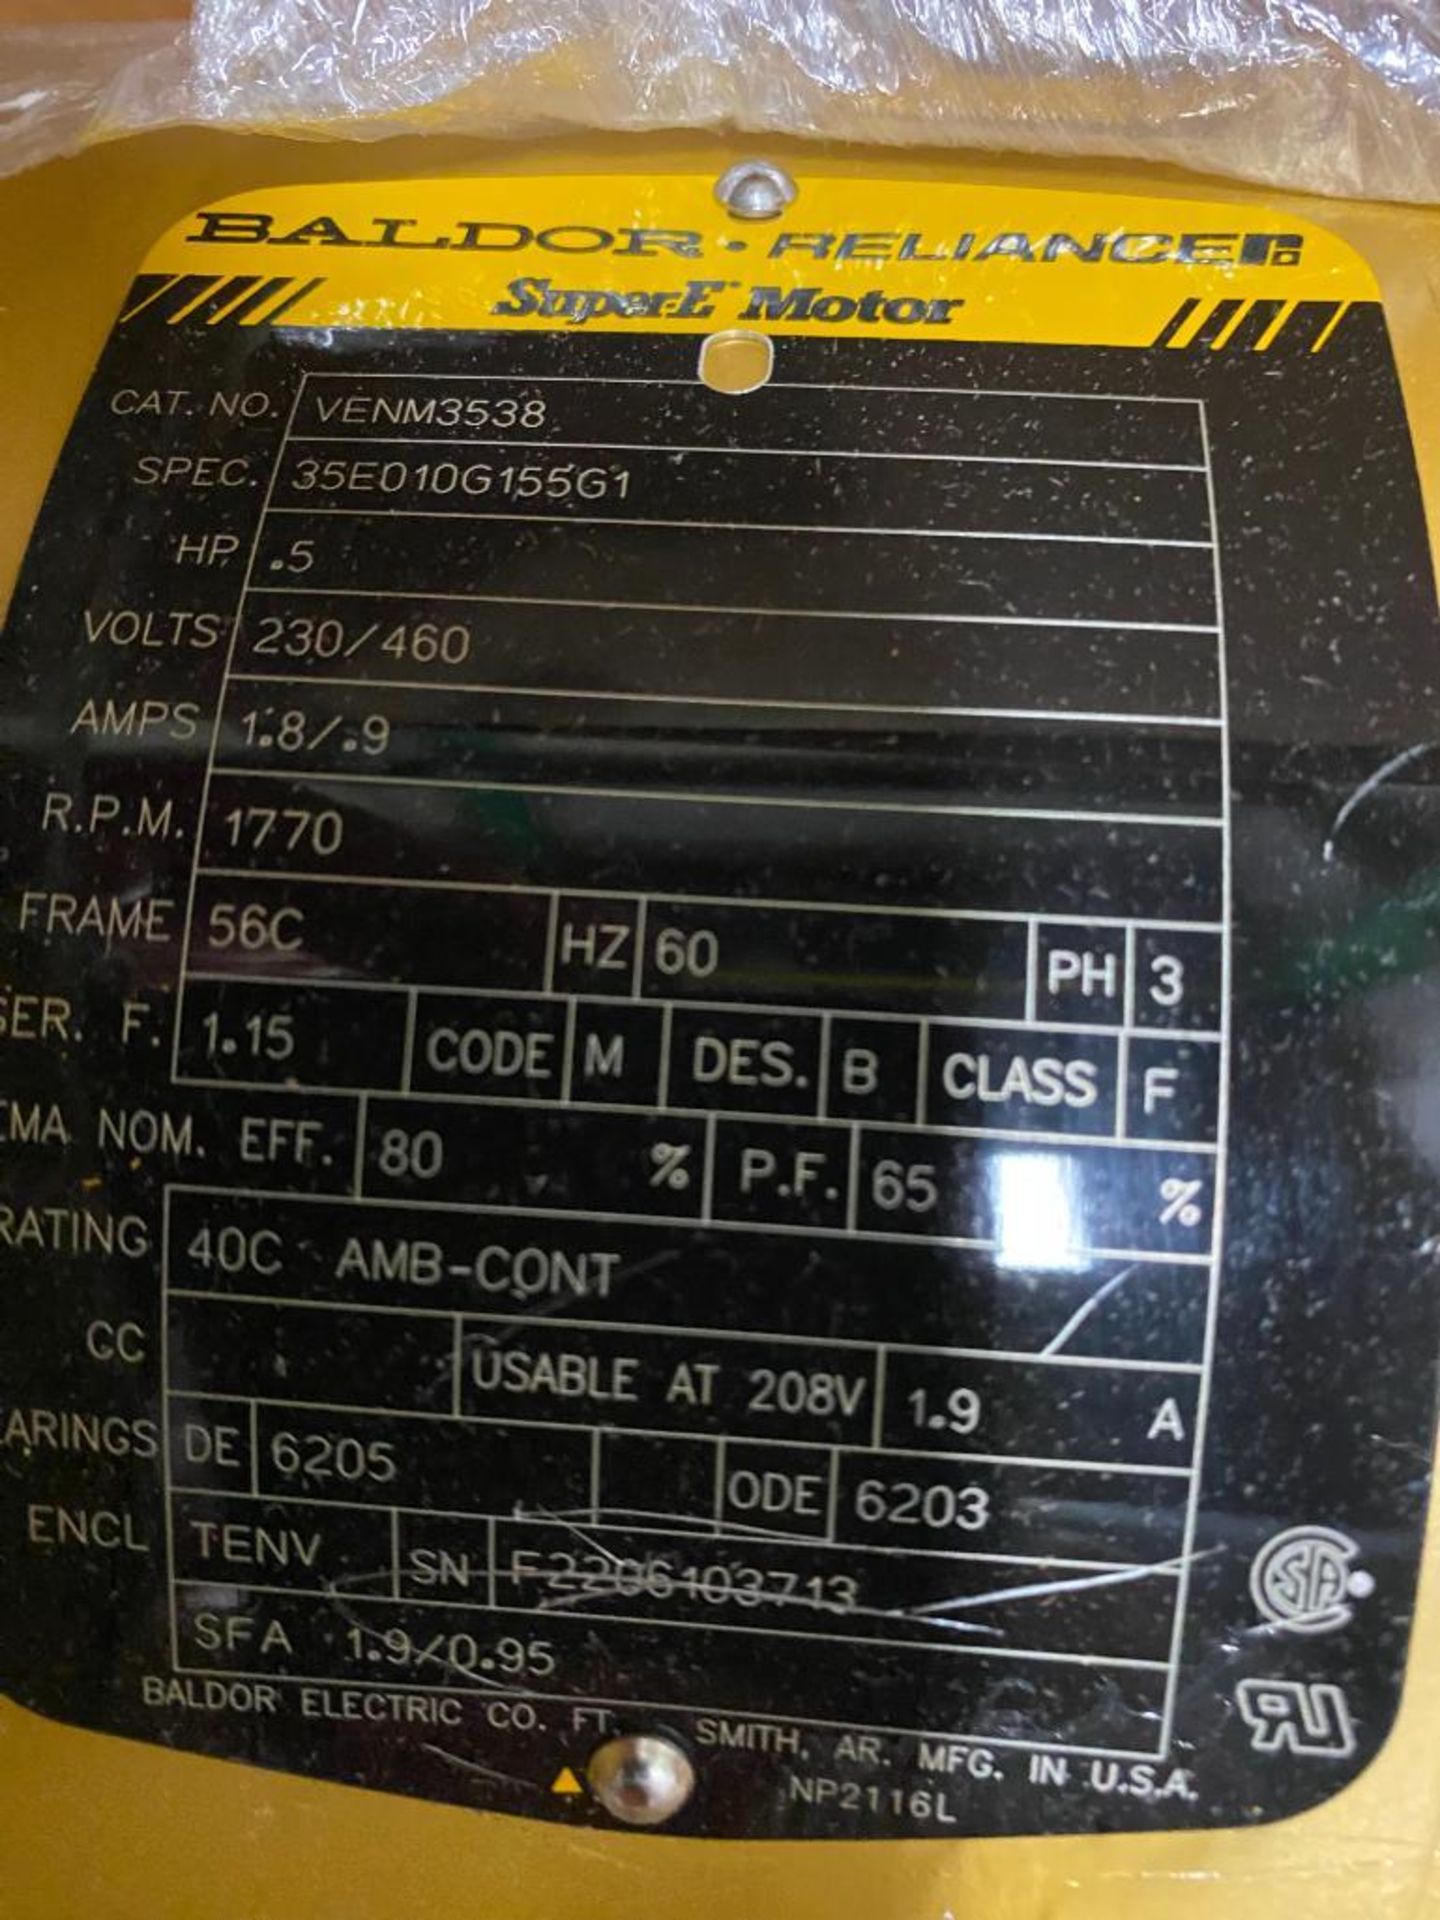 Baldor 1/2 HP Electric Motor, 230/460 V, 1770 RPM, 56C Frame, 60 Hz, 3 PH - Image 2 of 2